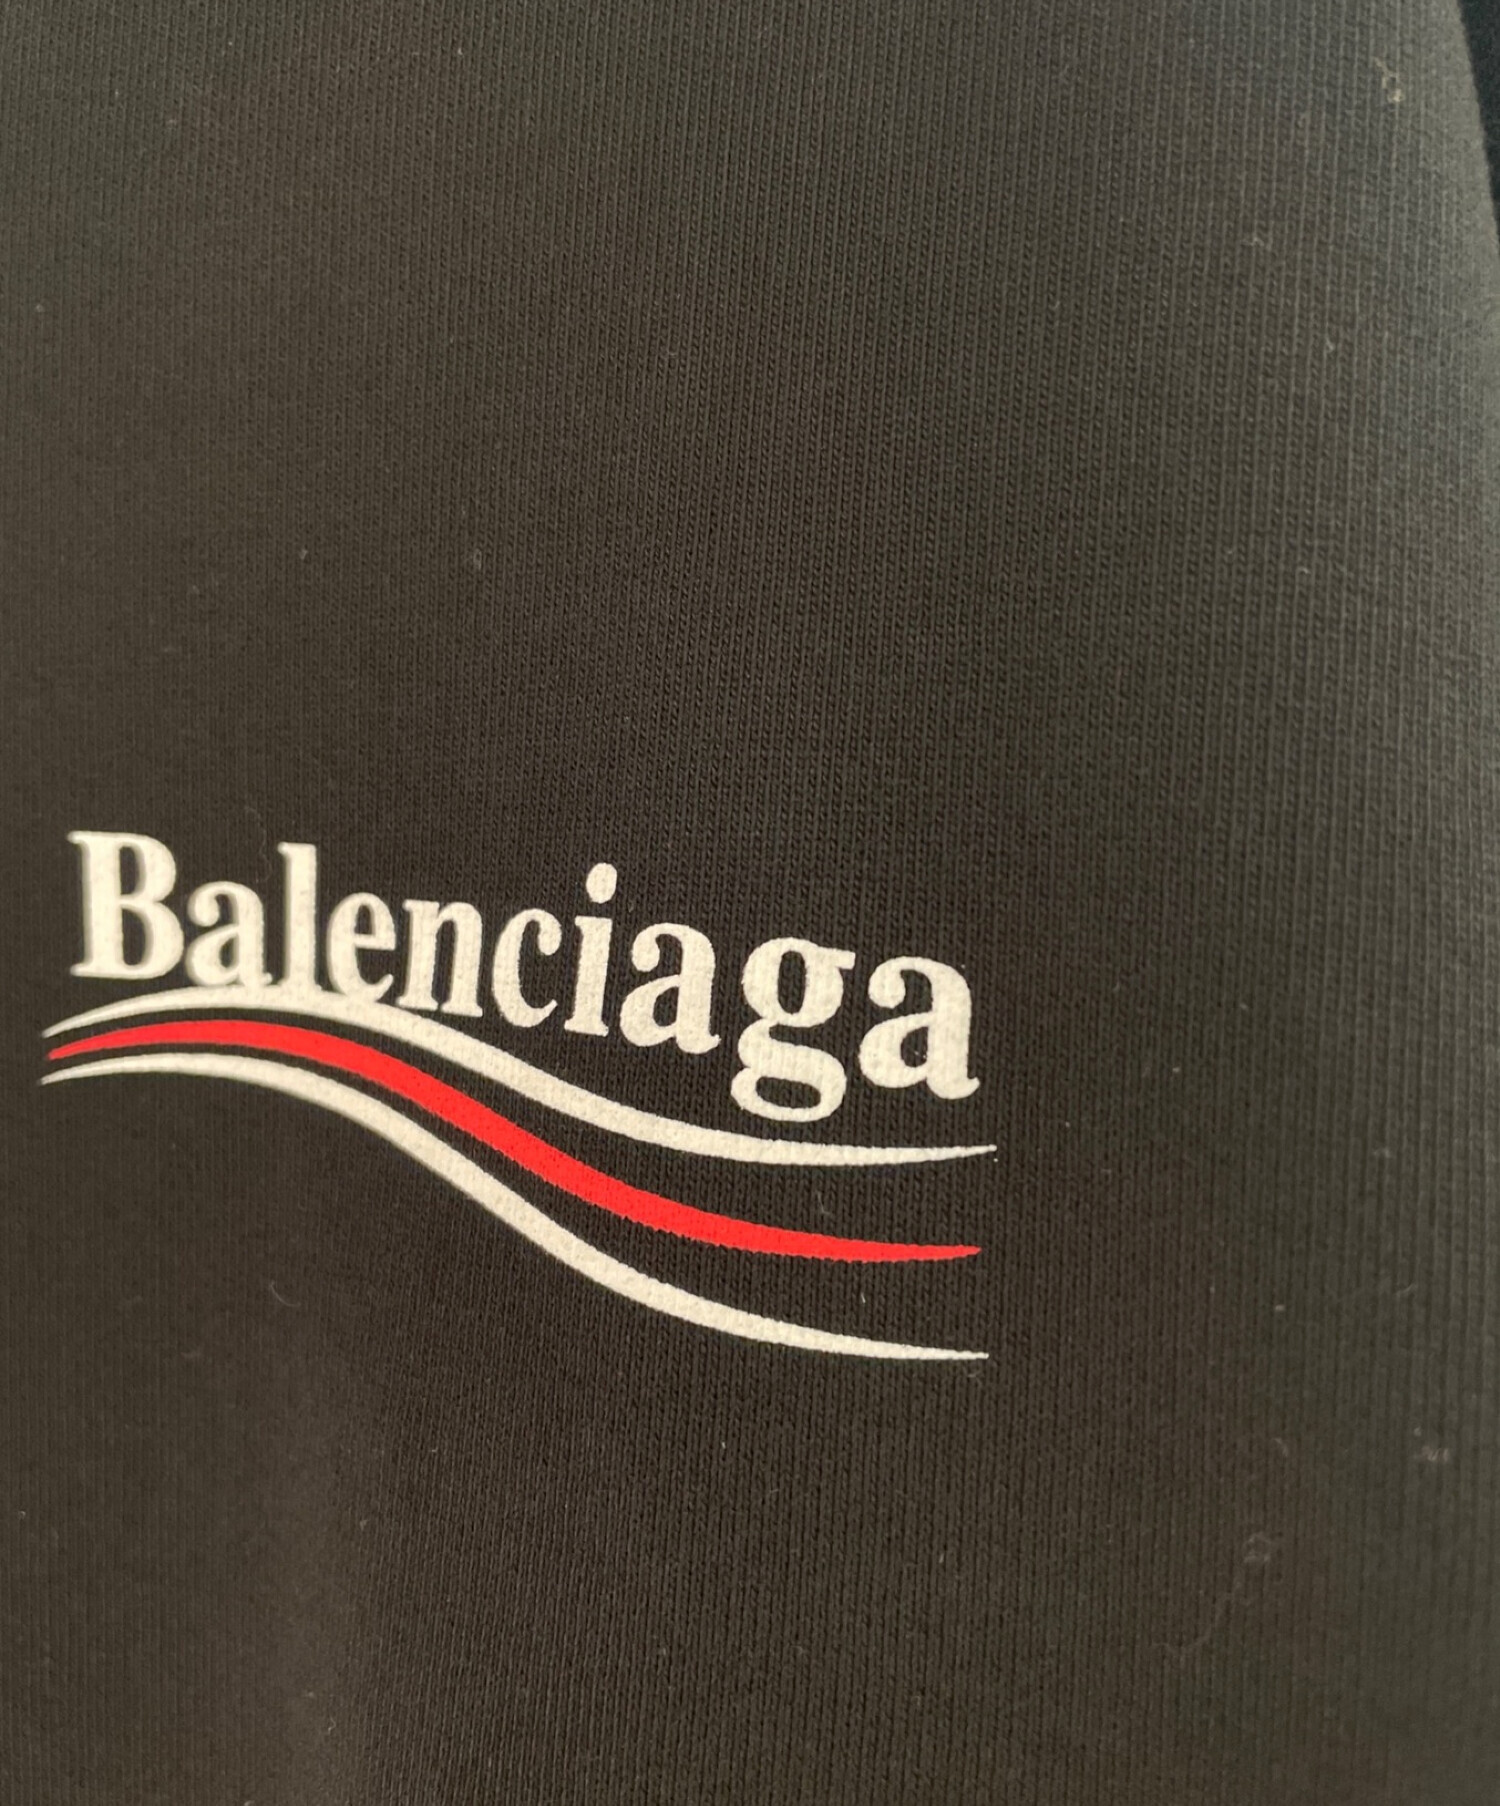 BALENCIAGA (バレンシアガ) ウェーブロゴプルオーバーパーカー ブラック サイズ:S